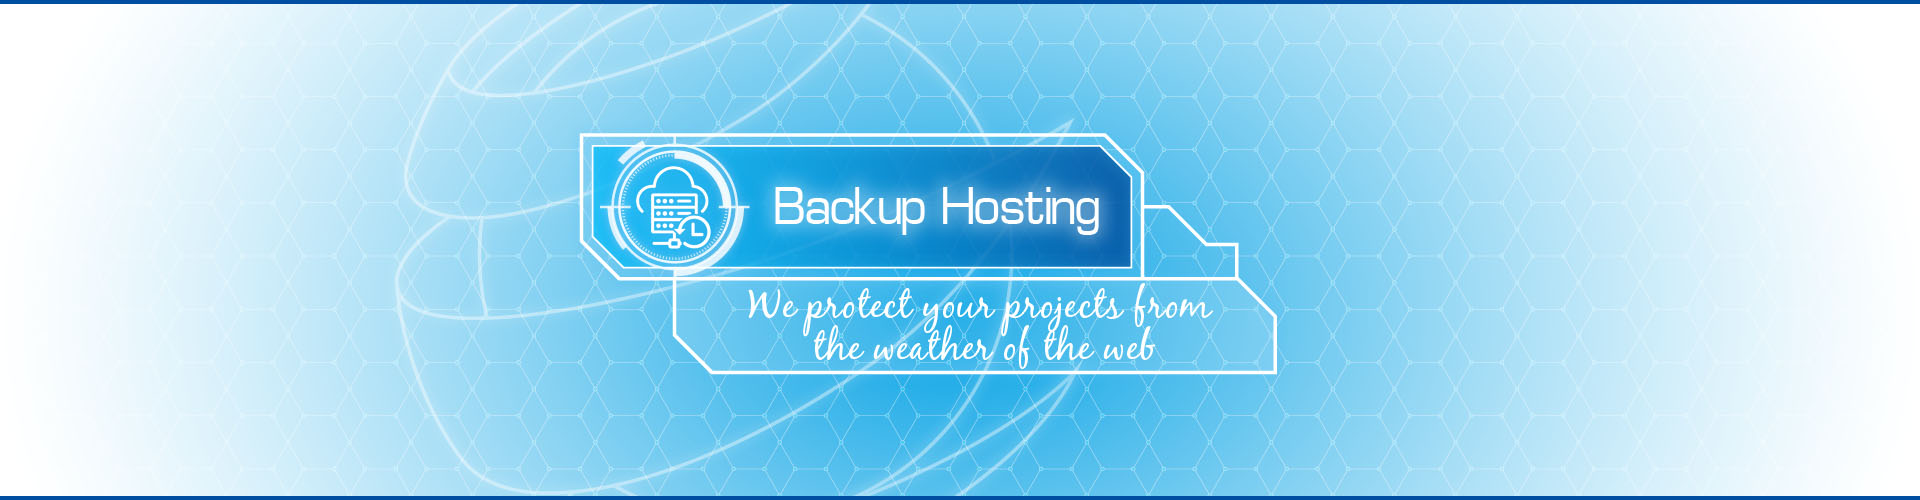 Backup Hosting